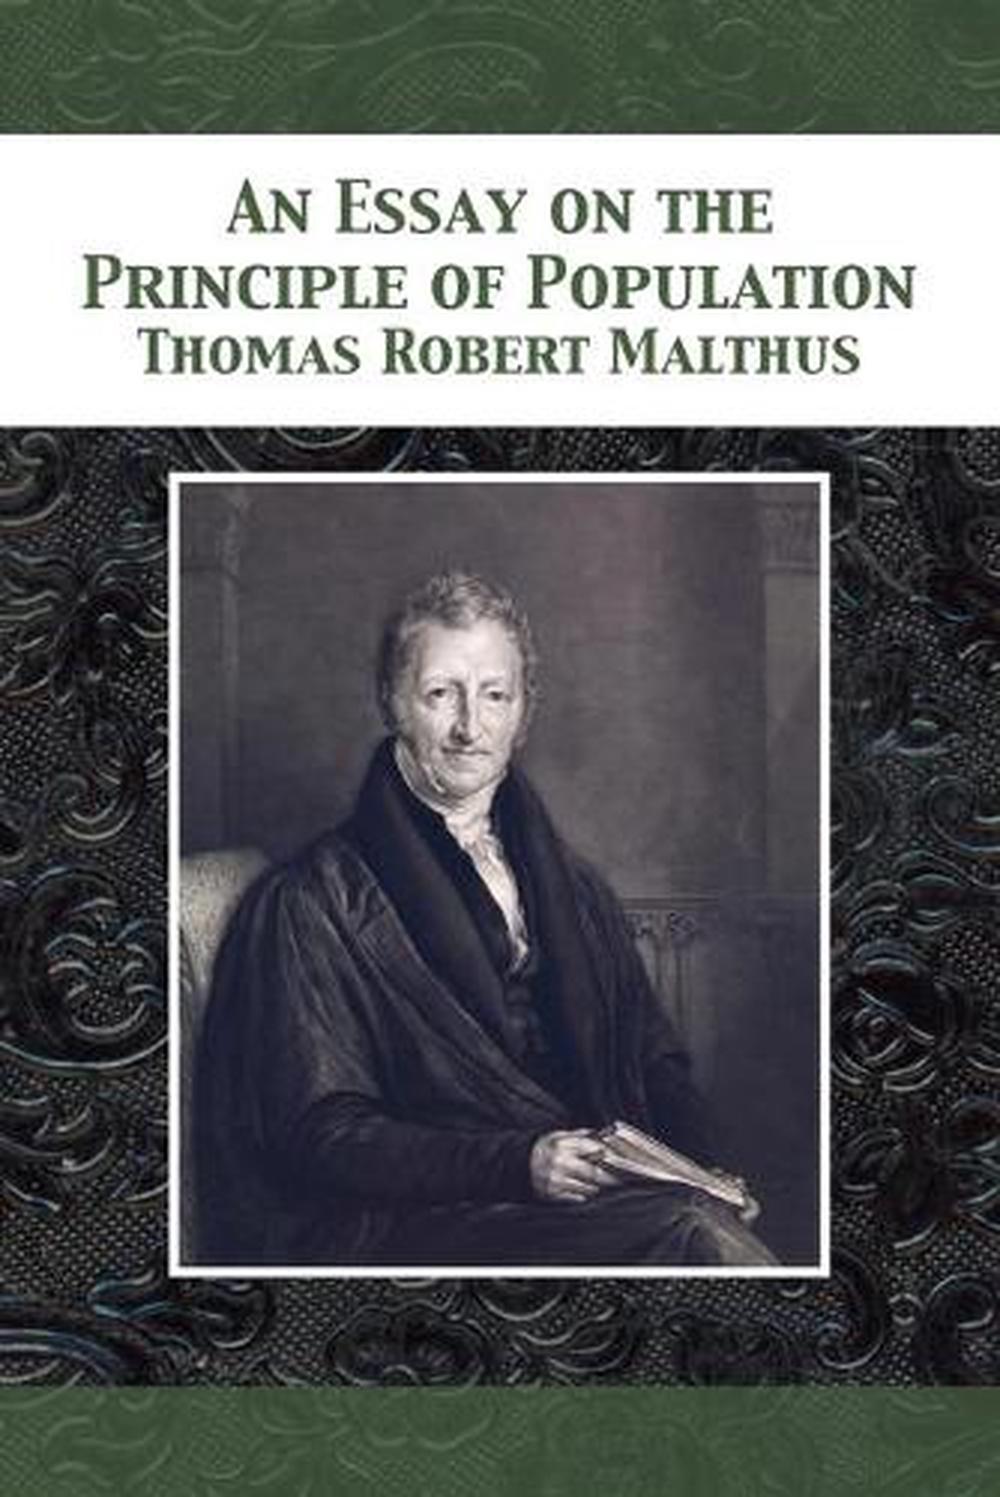 thomas malthus essay on population 1798